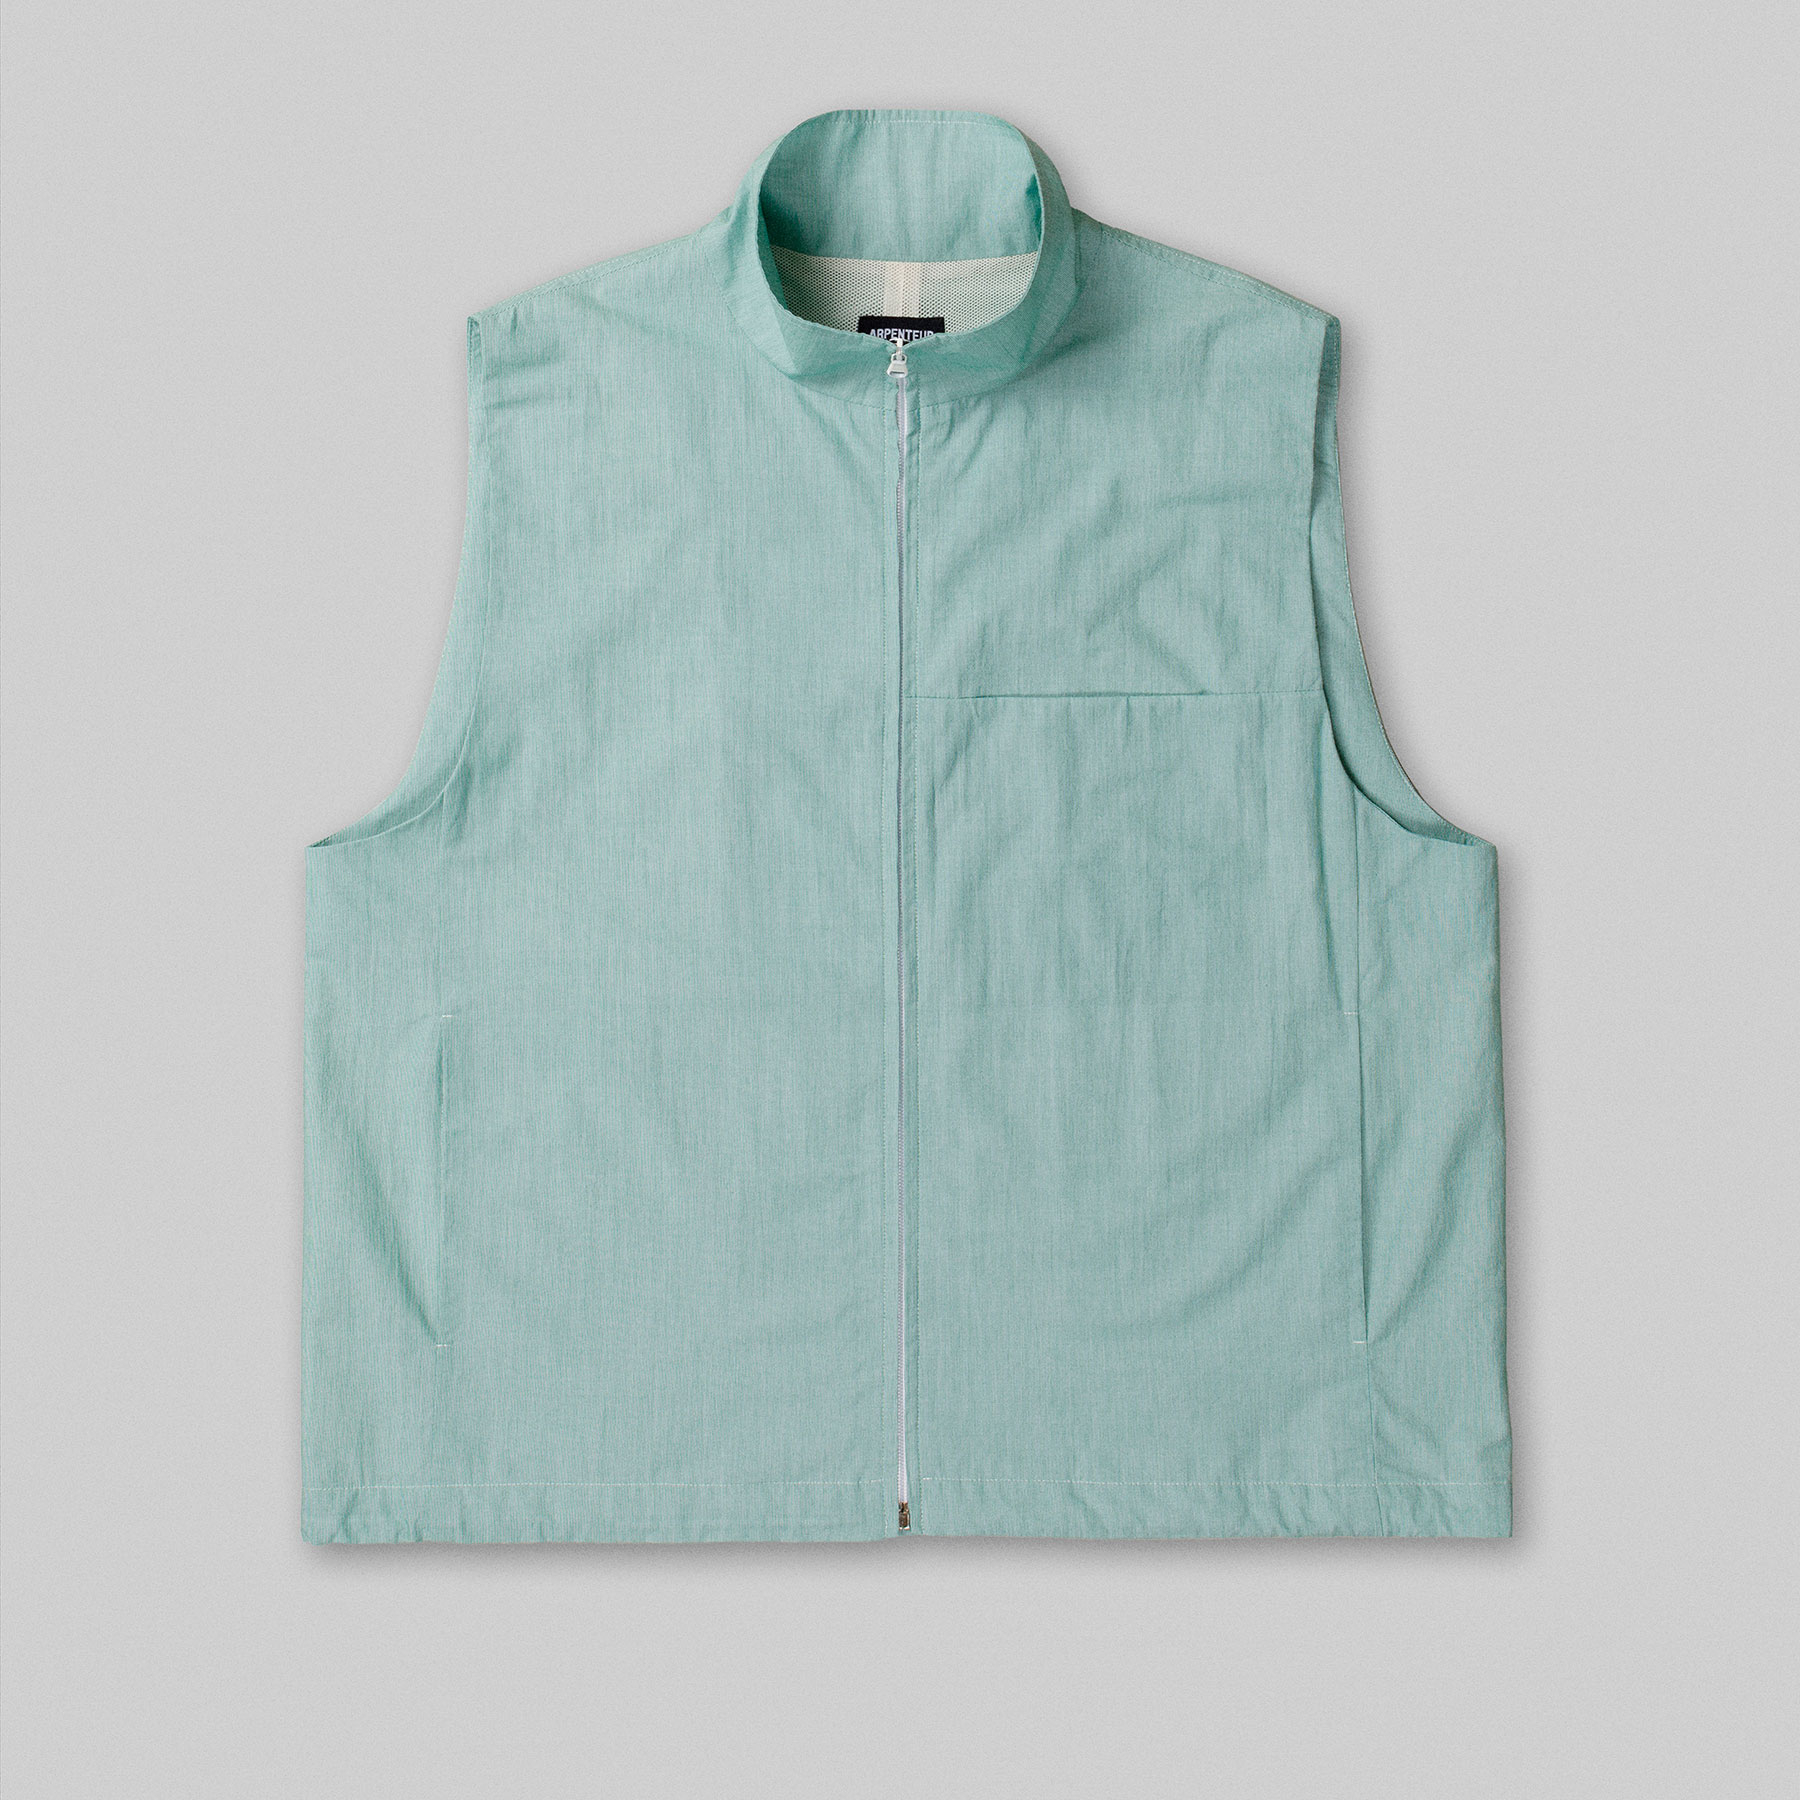 TRACK vest by Arpenteur in Green color